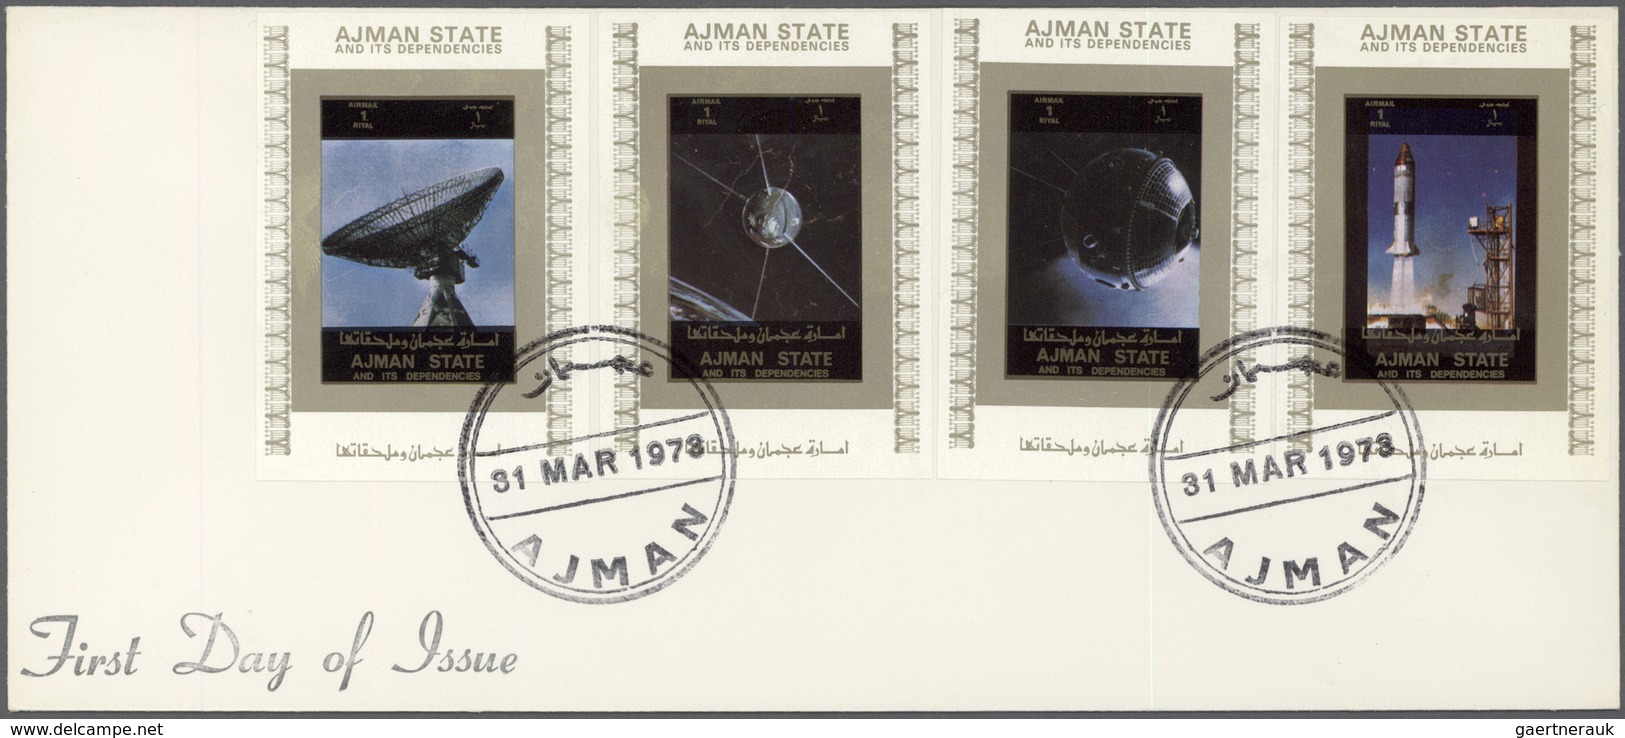 08035 Adschman / Ajman: 1973, U.S. Space Achievements, complete set of eight de luxe sheets with white mar